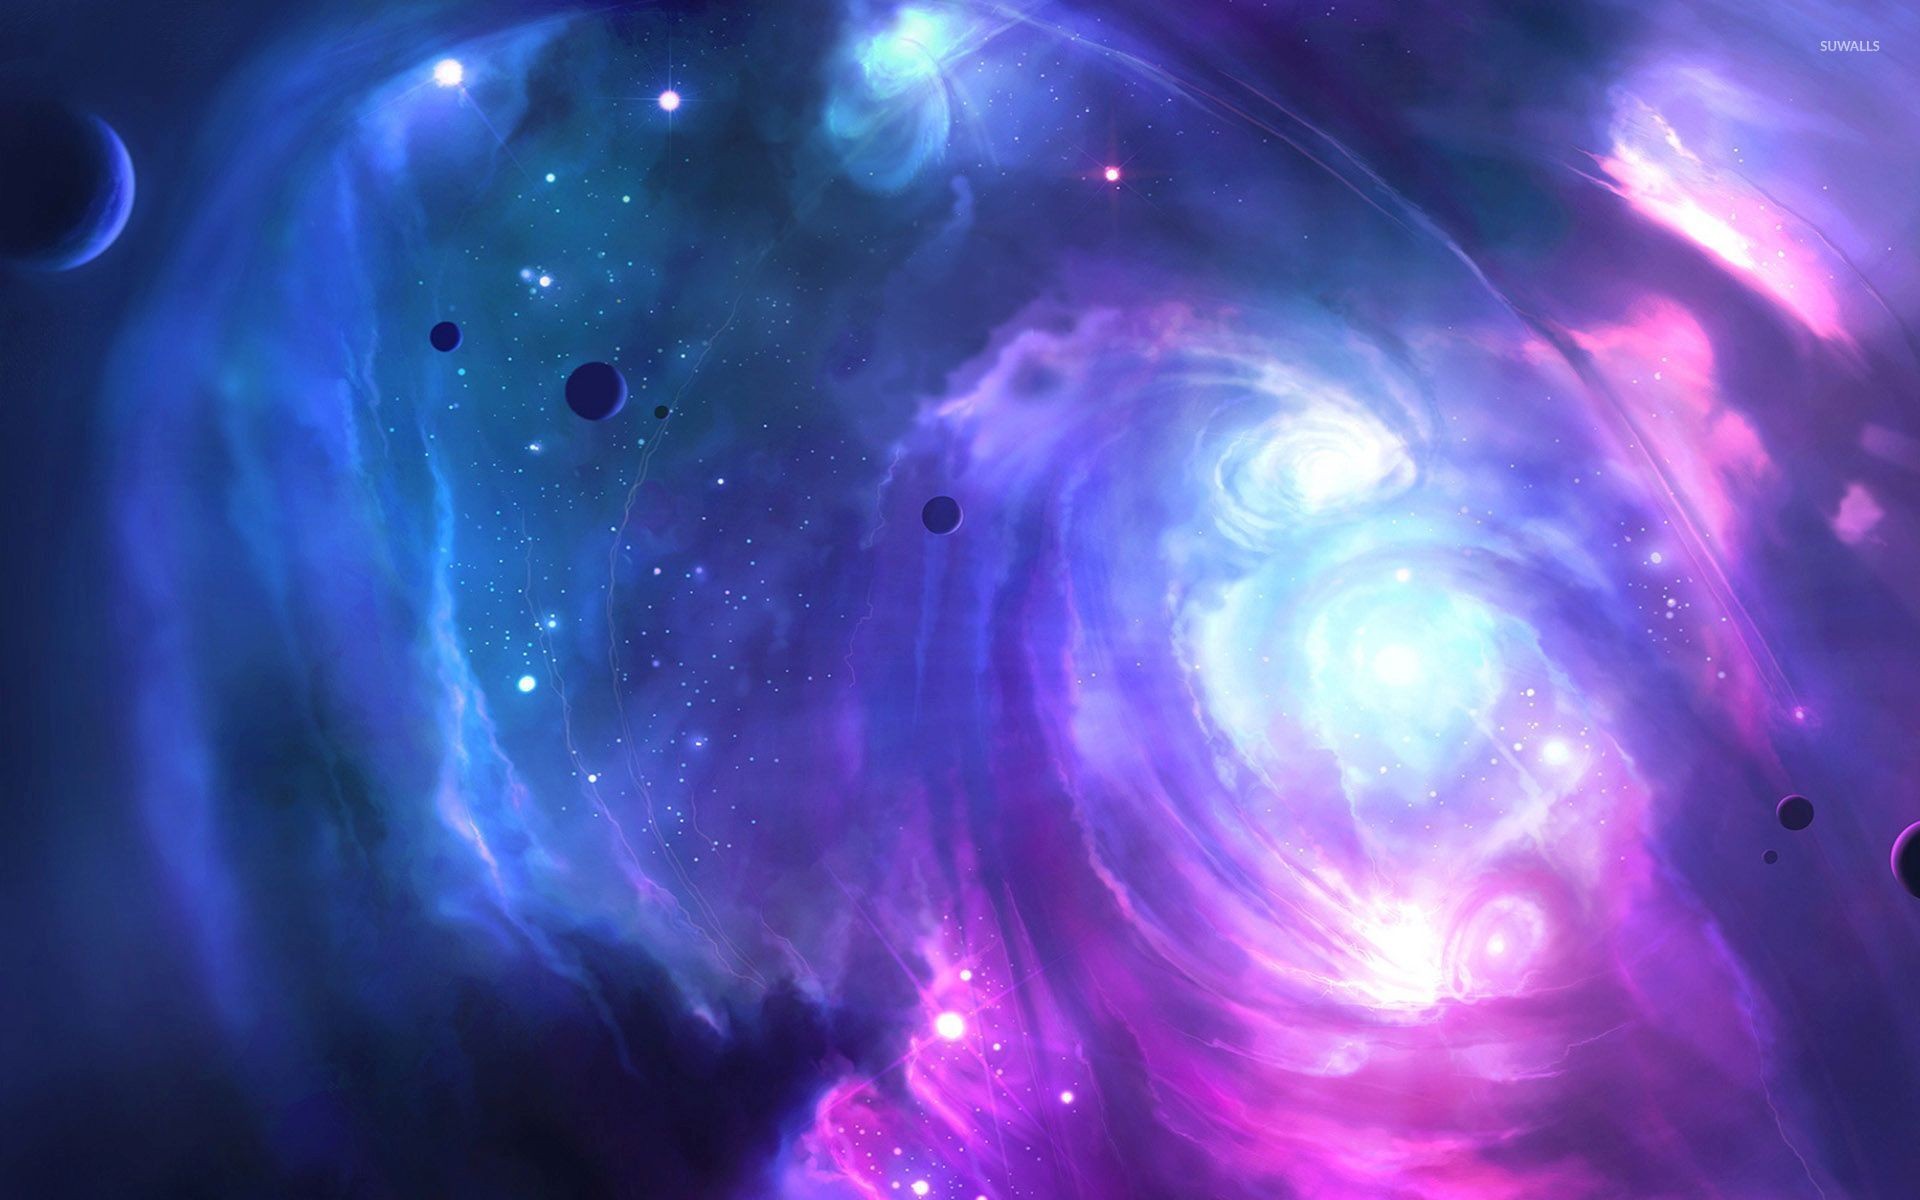 papel pintado rosado y azul,púrpura,violeta,espacio exterior,ligero,objeto astronómico